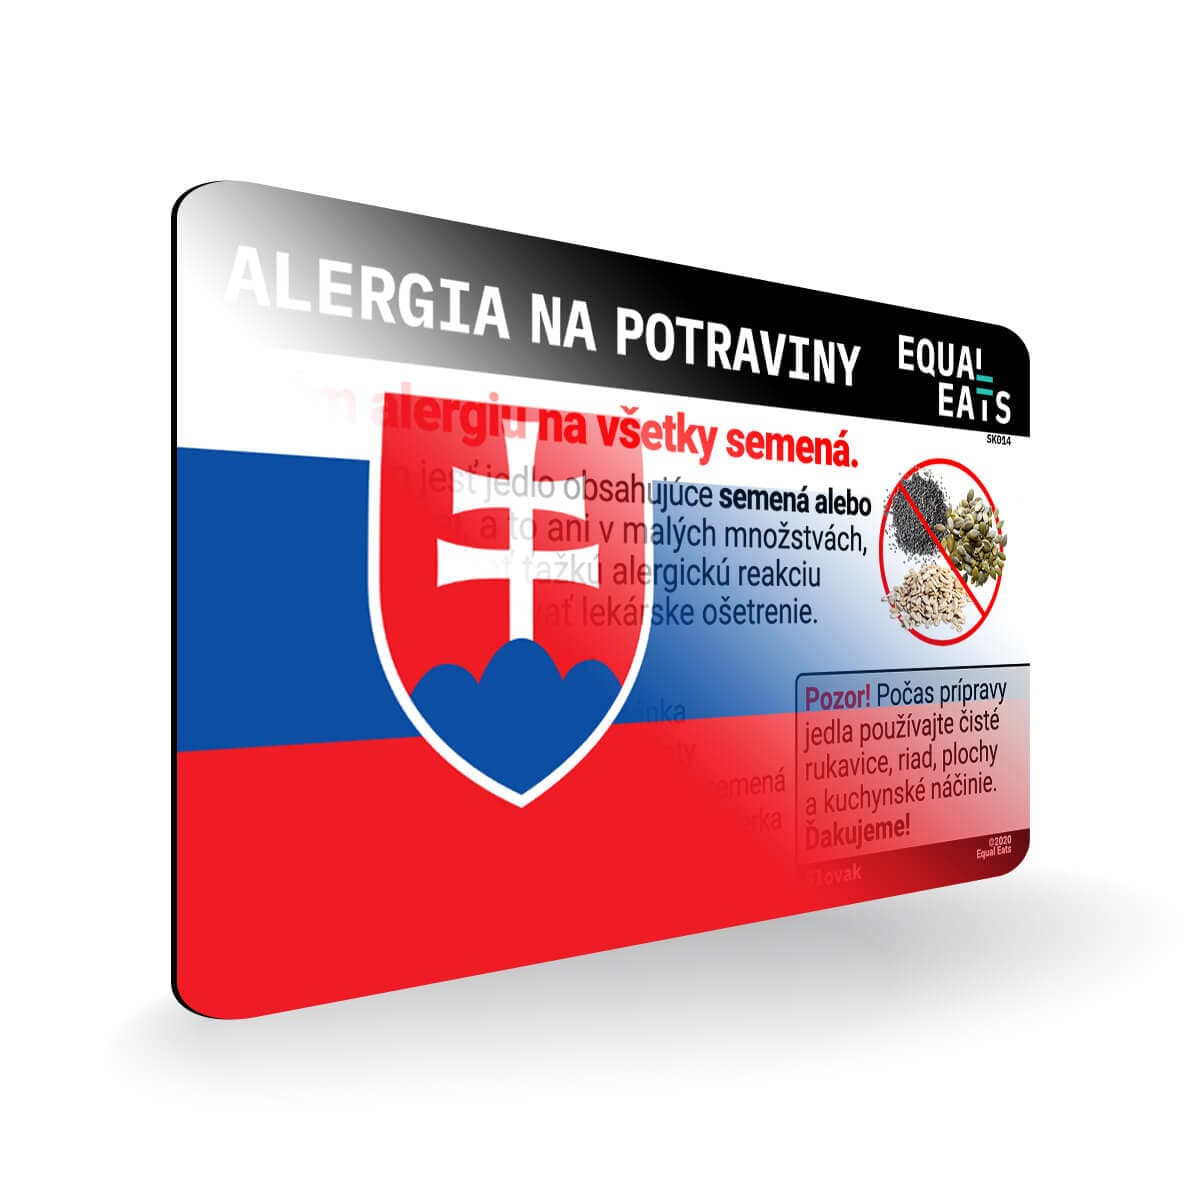 Seed Allergy in Slovak. Seed Allergy Card for Slovakia